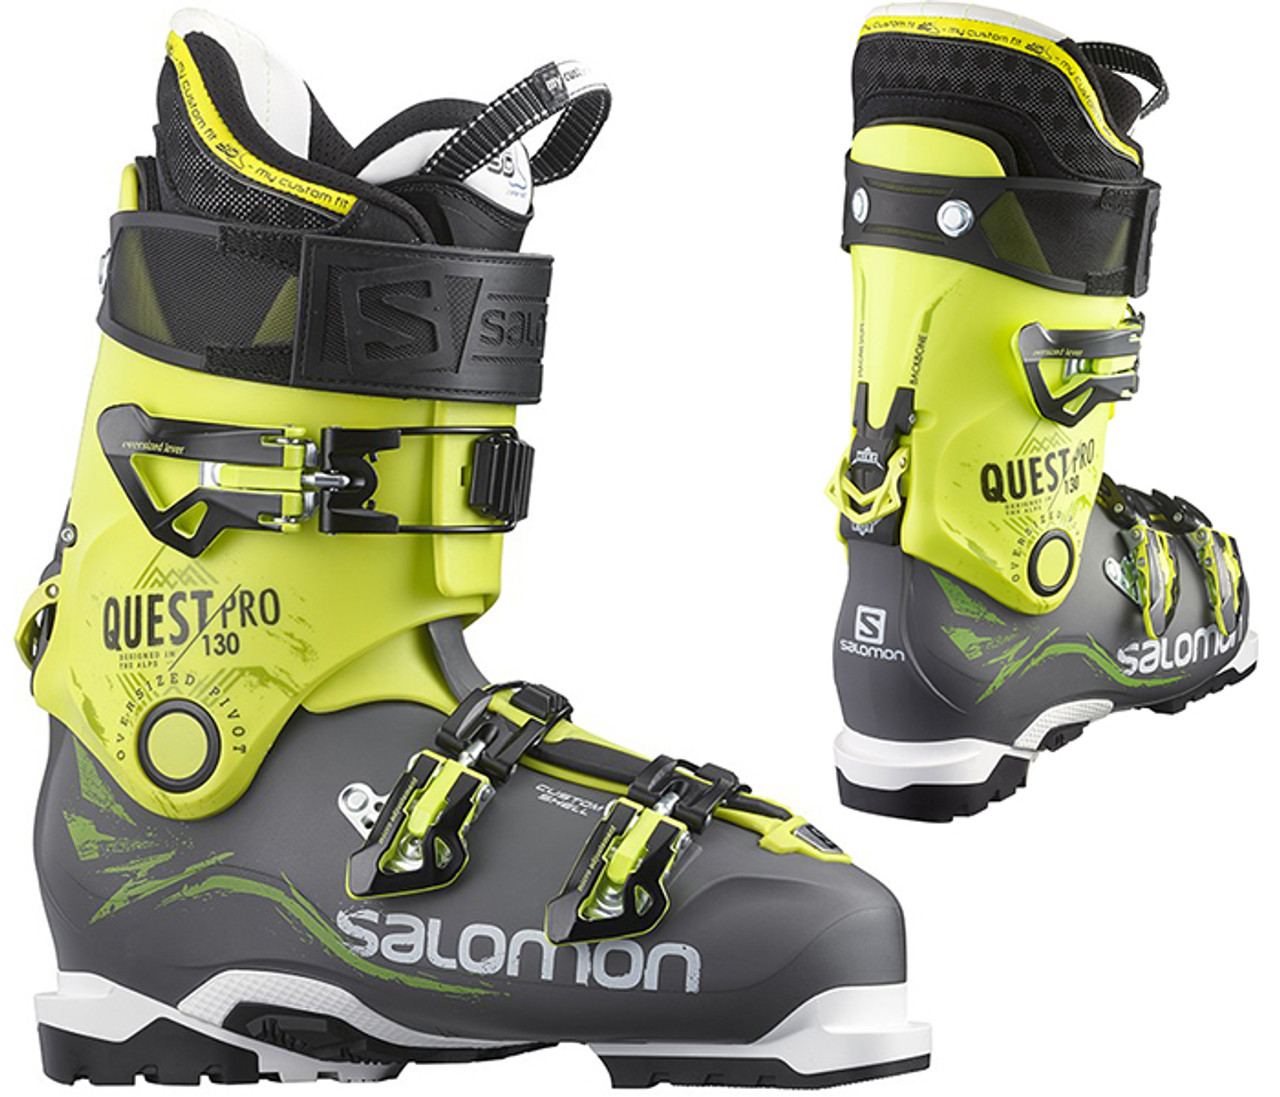 Salomon Quest Pro 130 Ski